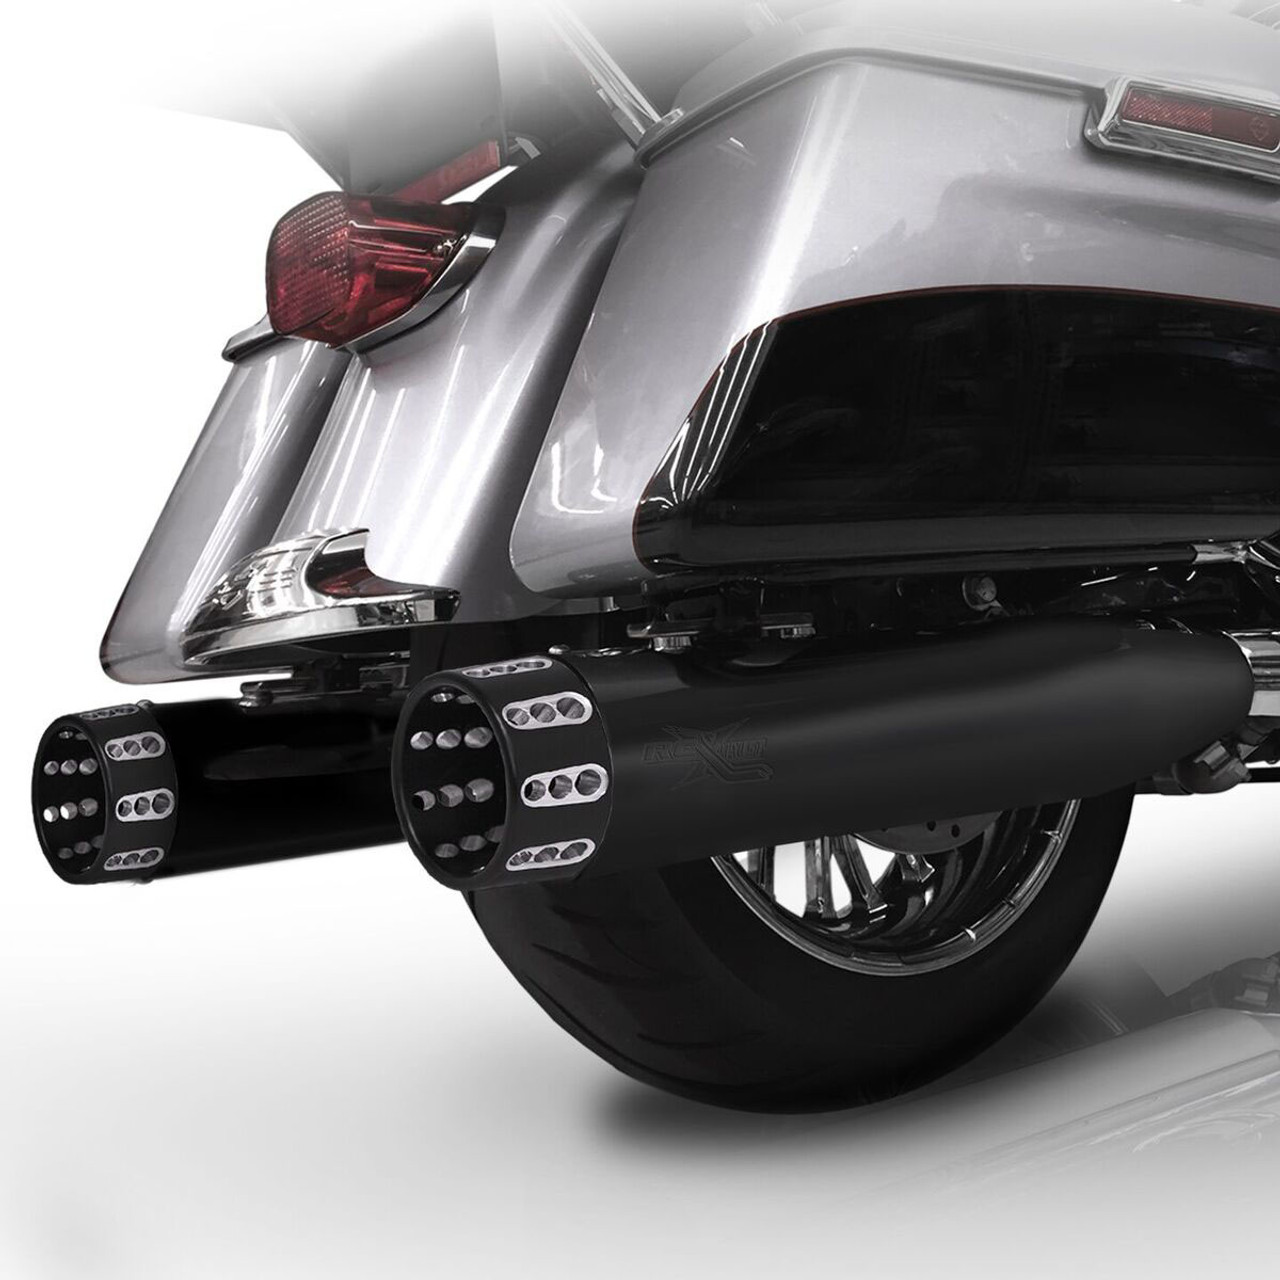 RCX 4.5 inch Slip On Mufflers for Harley Davidson Touring Models '17-Up